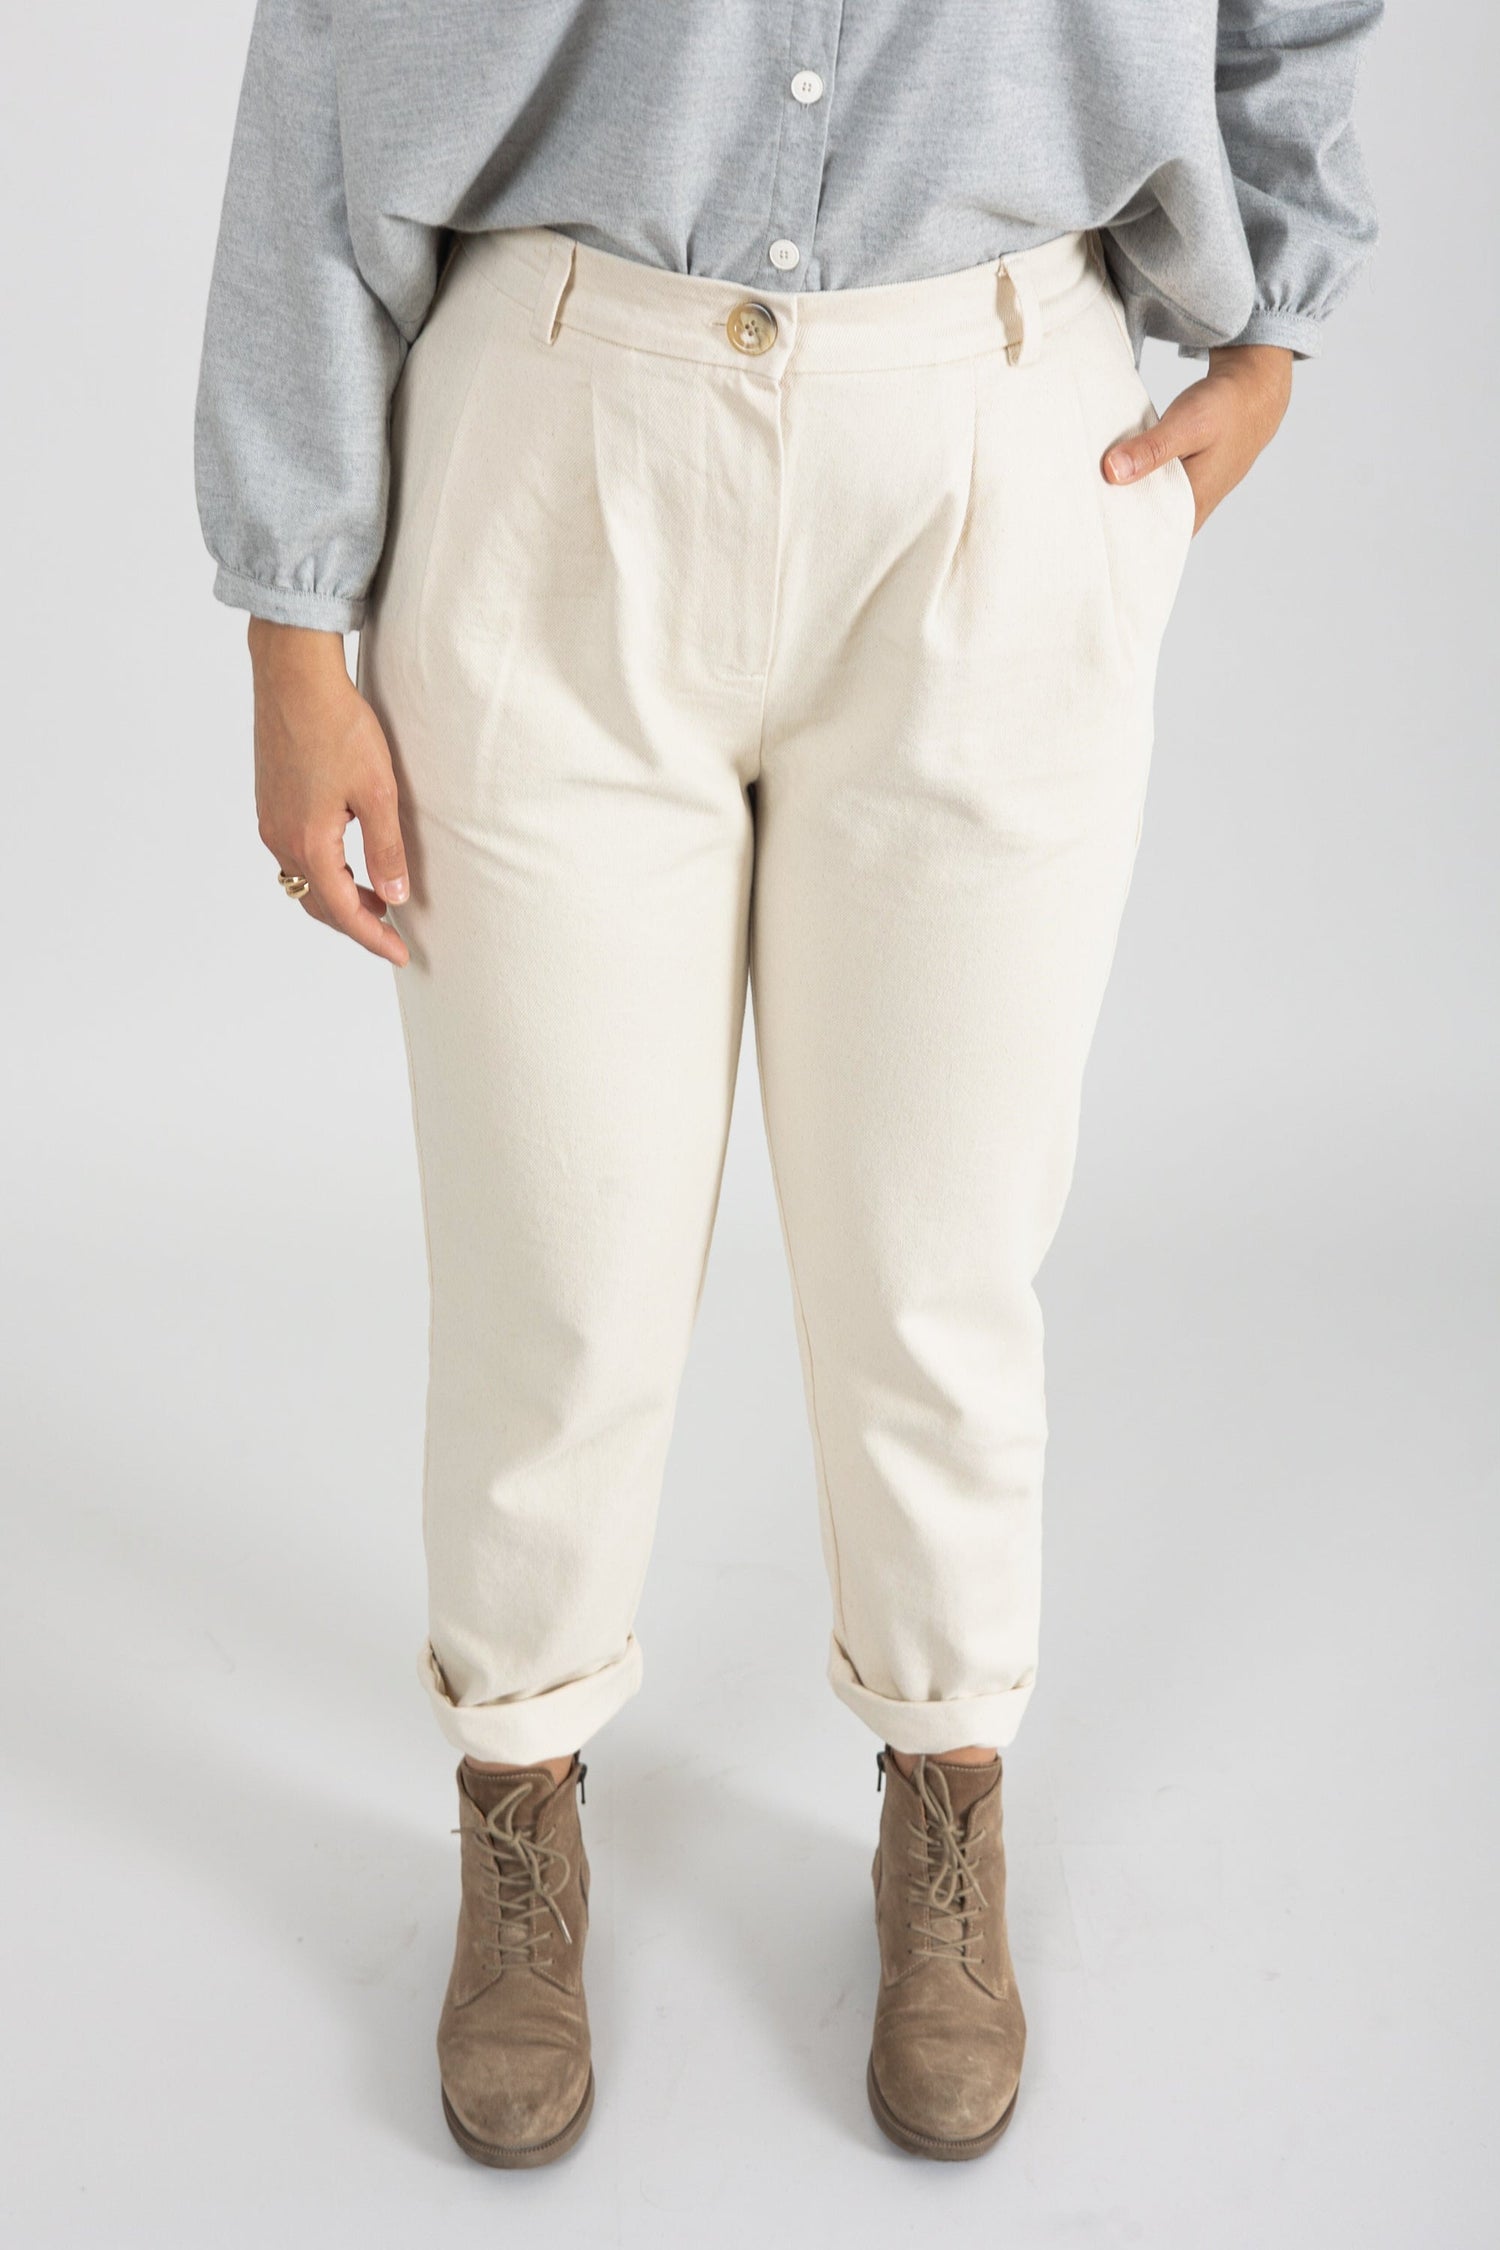 Serra Cotton Trousers White